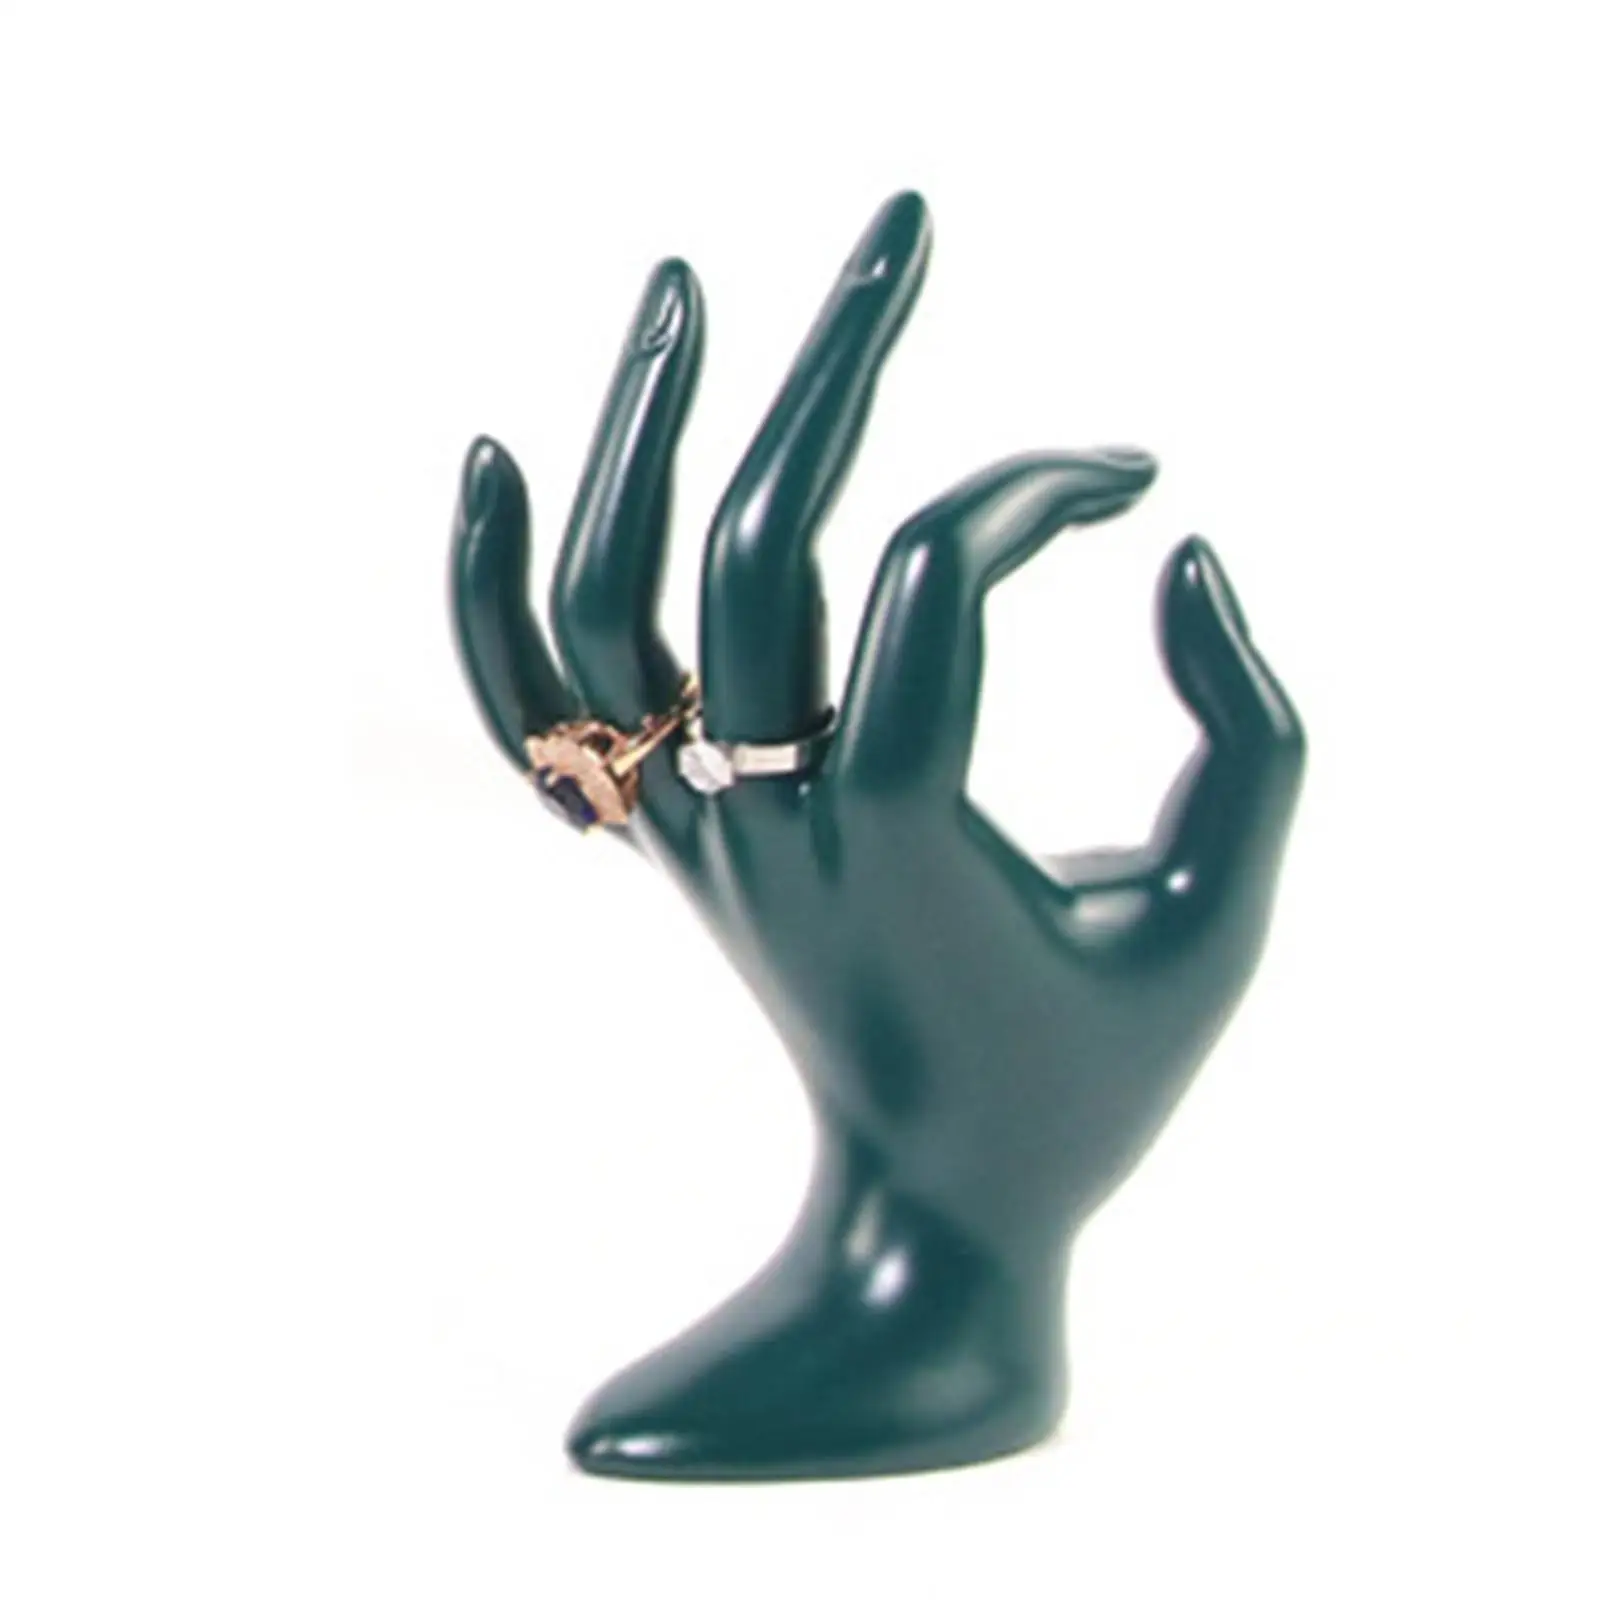  Jewelry Display Holder  Shaped Bracelet Holder Necklace  Support Holder Home Organization Green